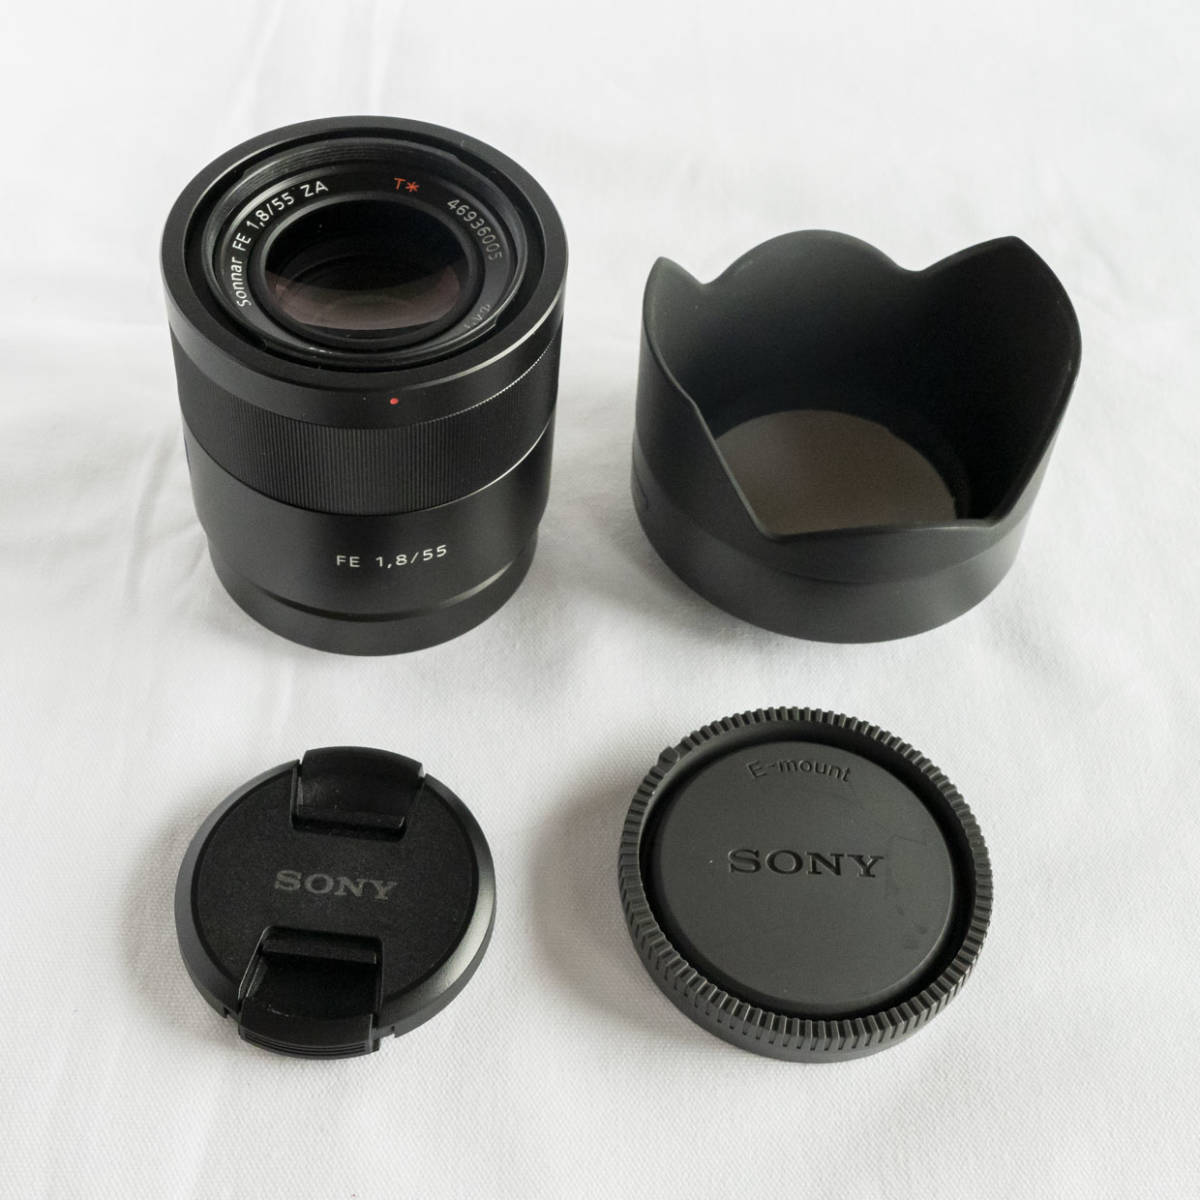  Sony lens Carl Zeiss Sonnar FE 1.8 55mm ZA ZEISS SONY